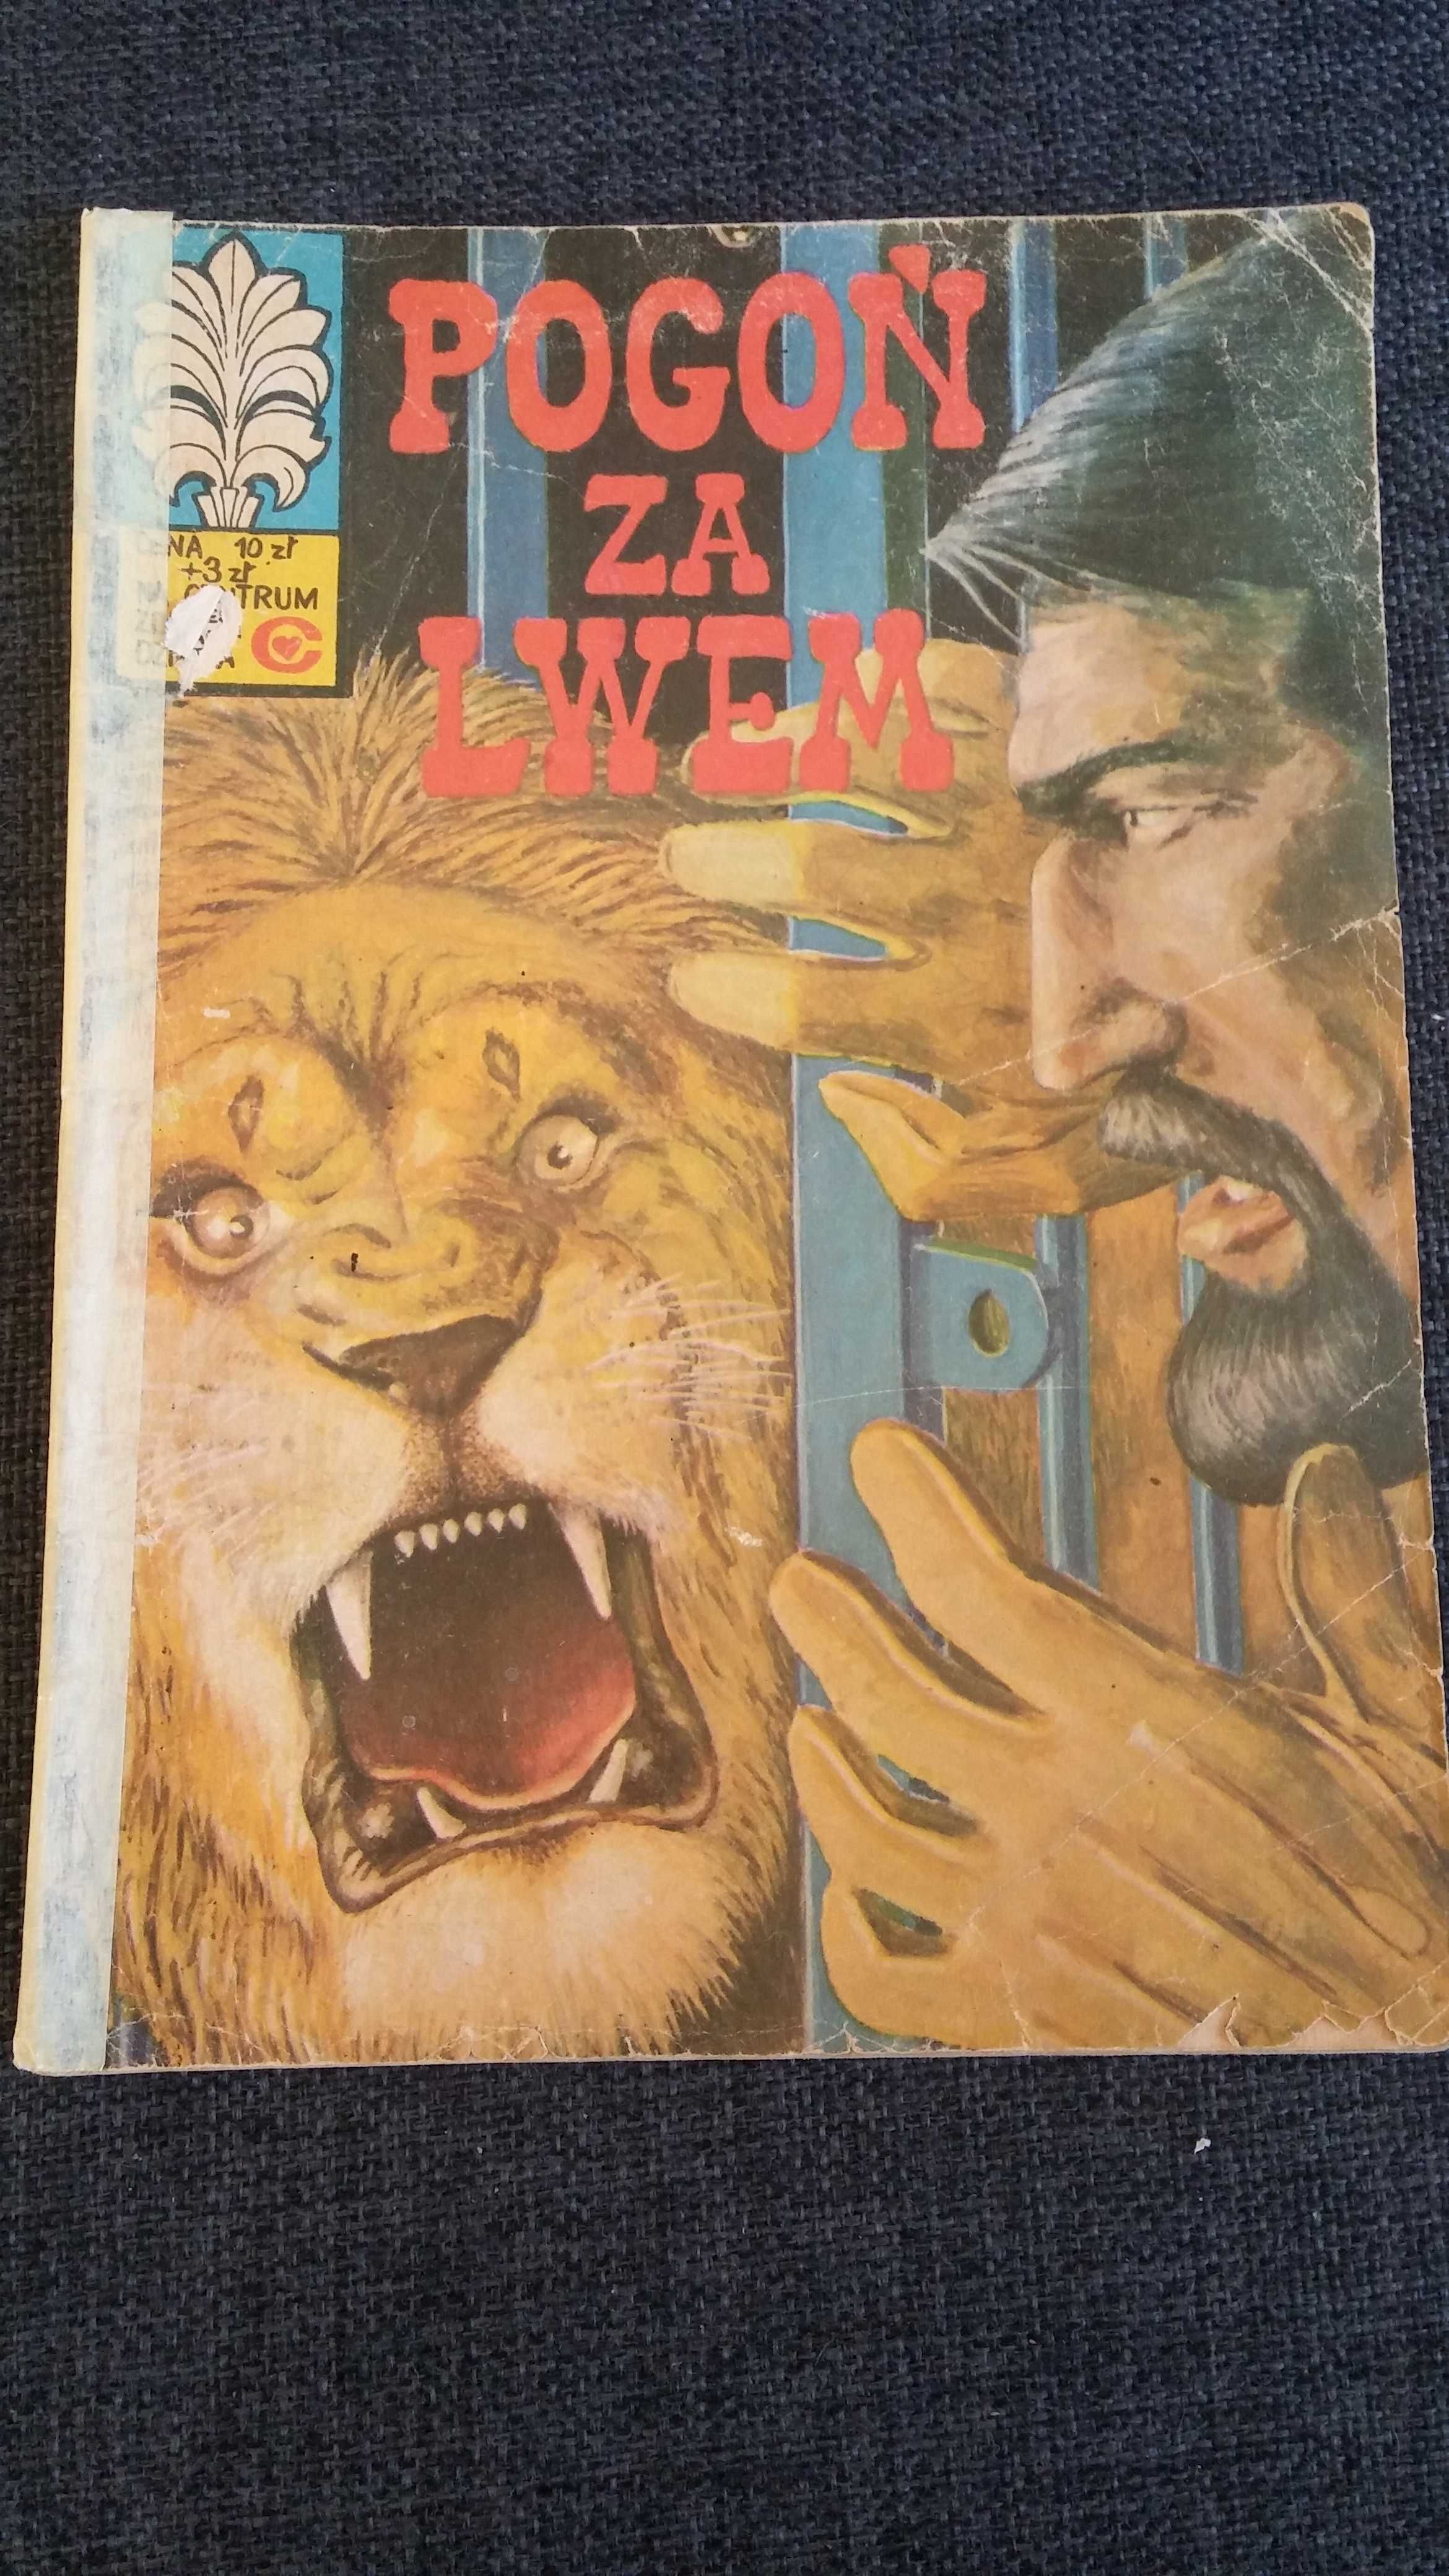 Pogoń za lwem kapitan Żbik 1980r komiks